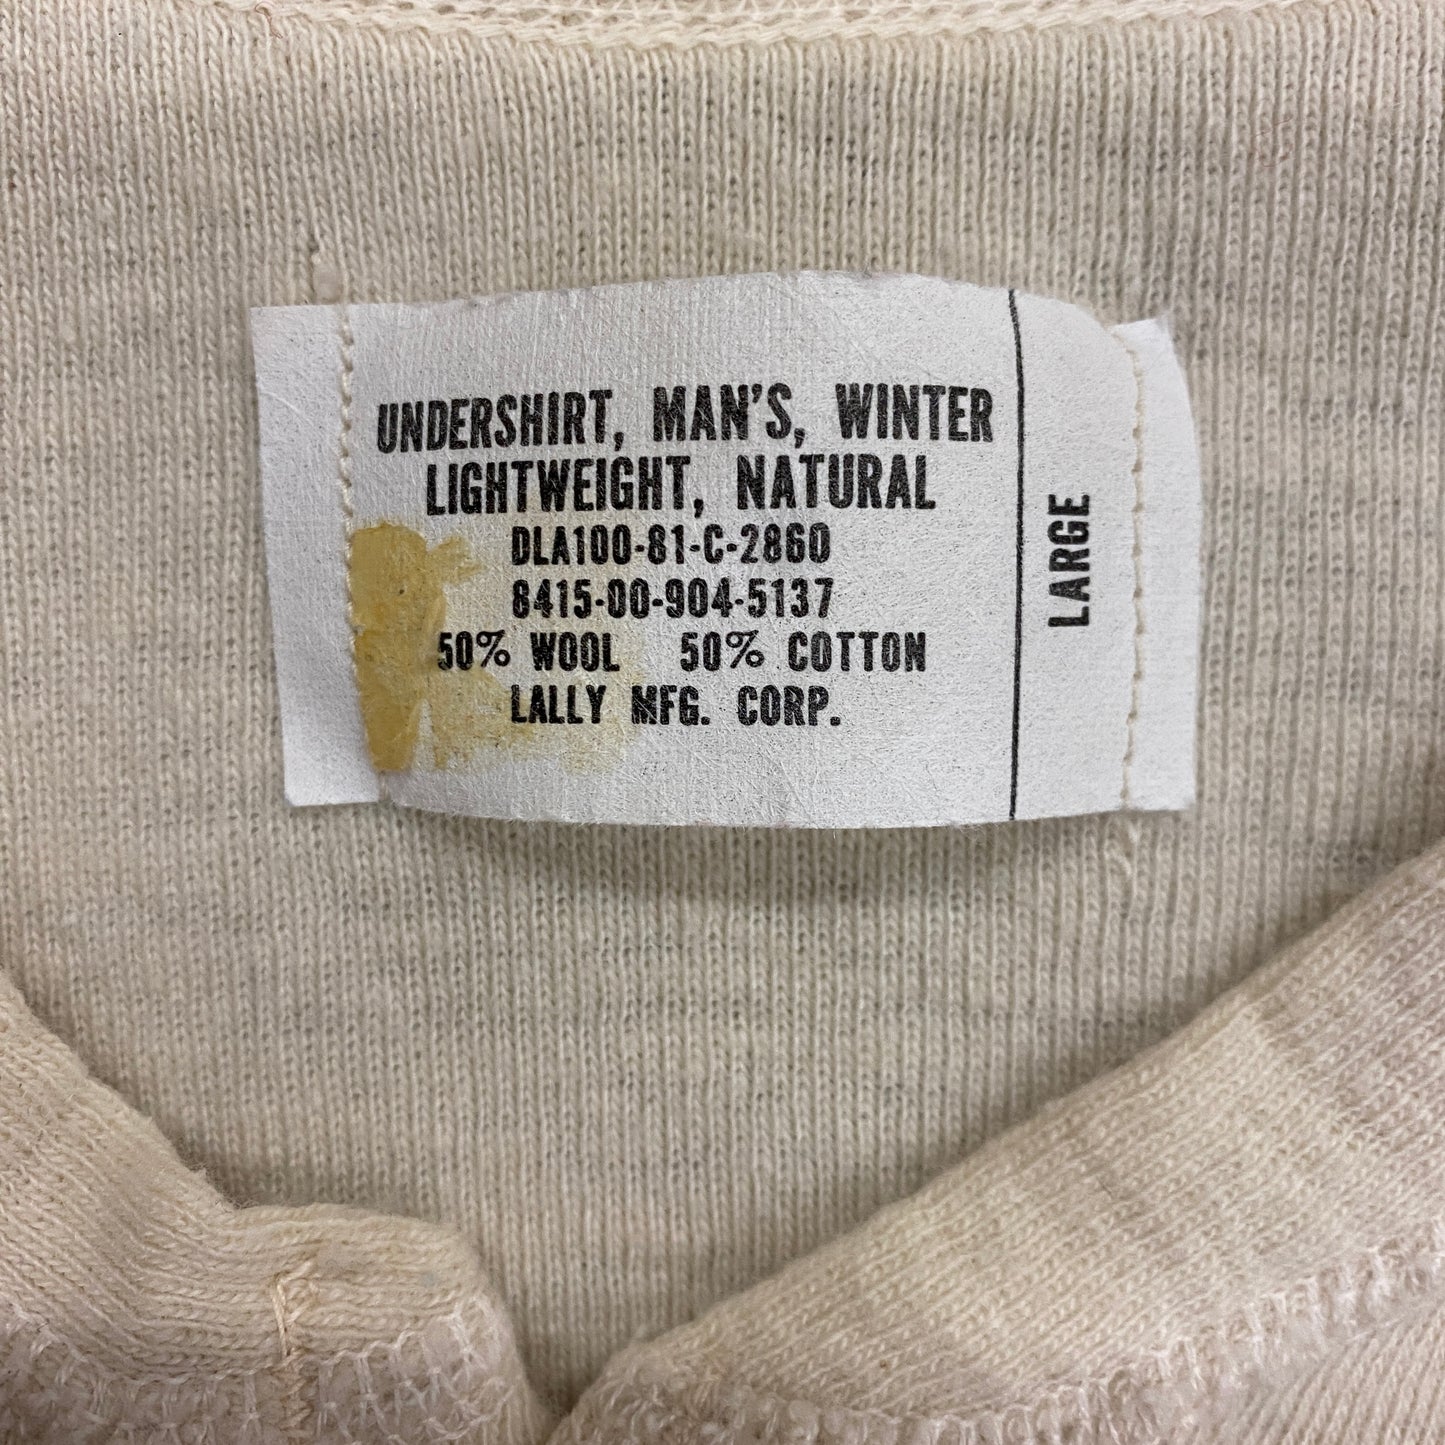 1980s Type 1 Cotton & Wool Military Undershirt - Size Large